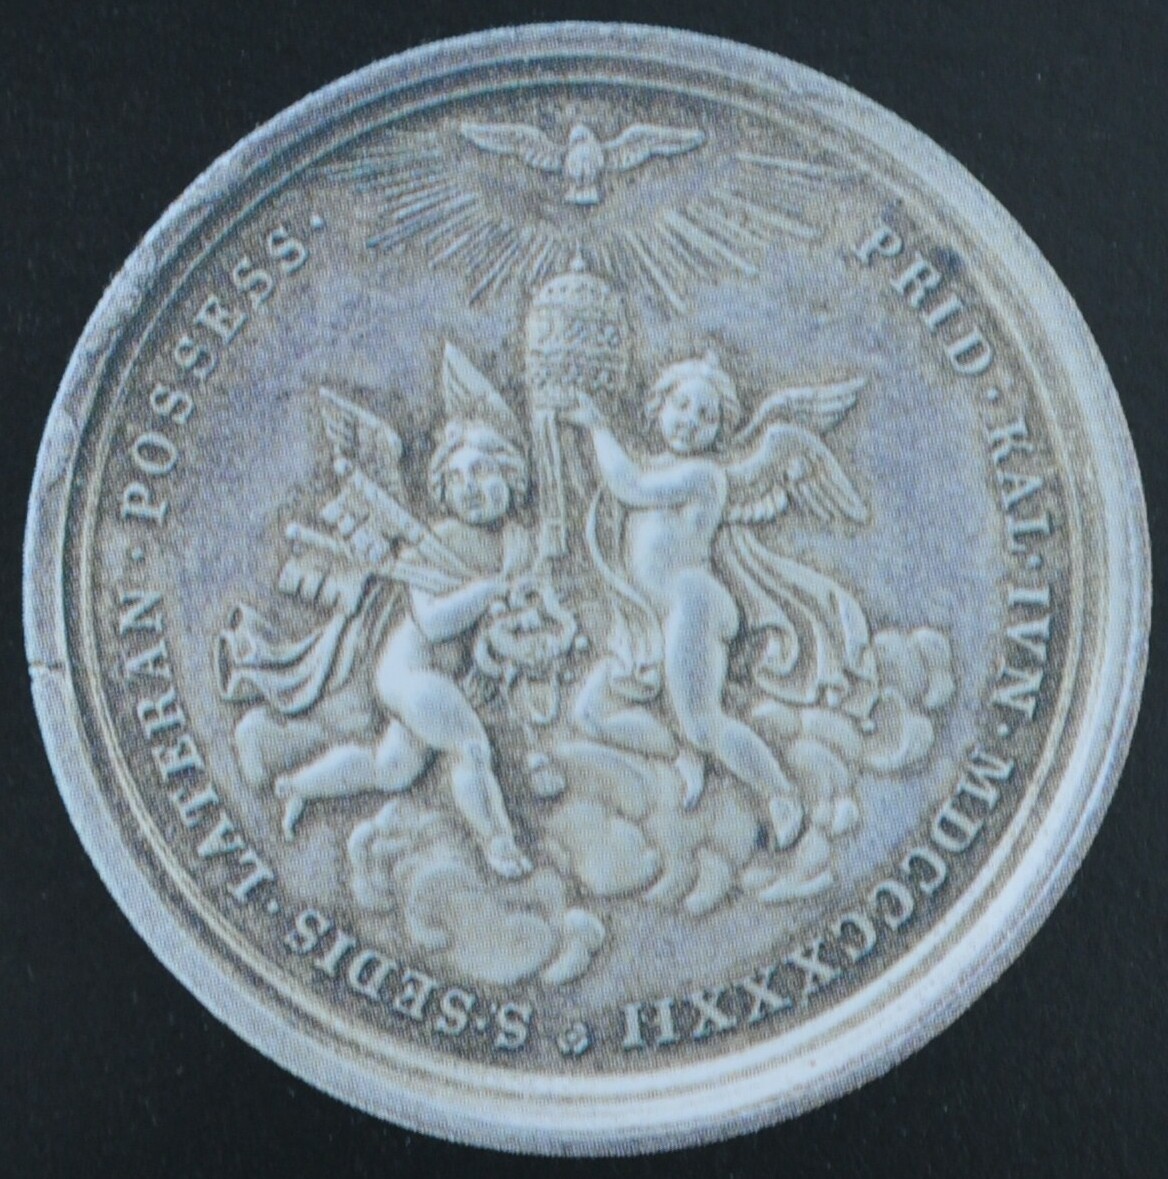 Possessio medal 1832